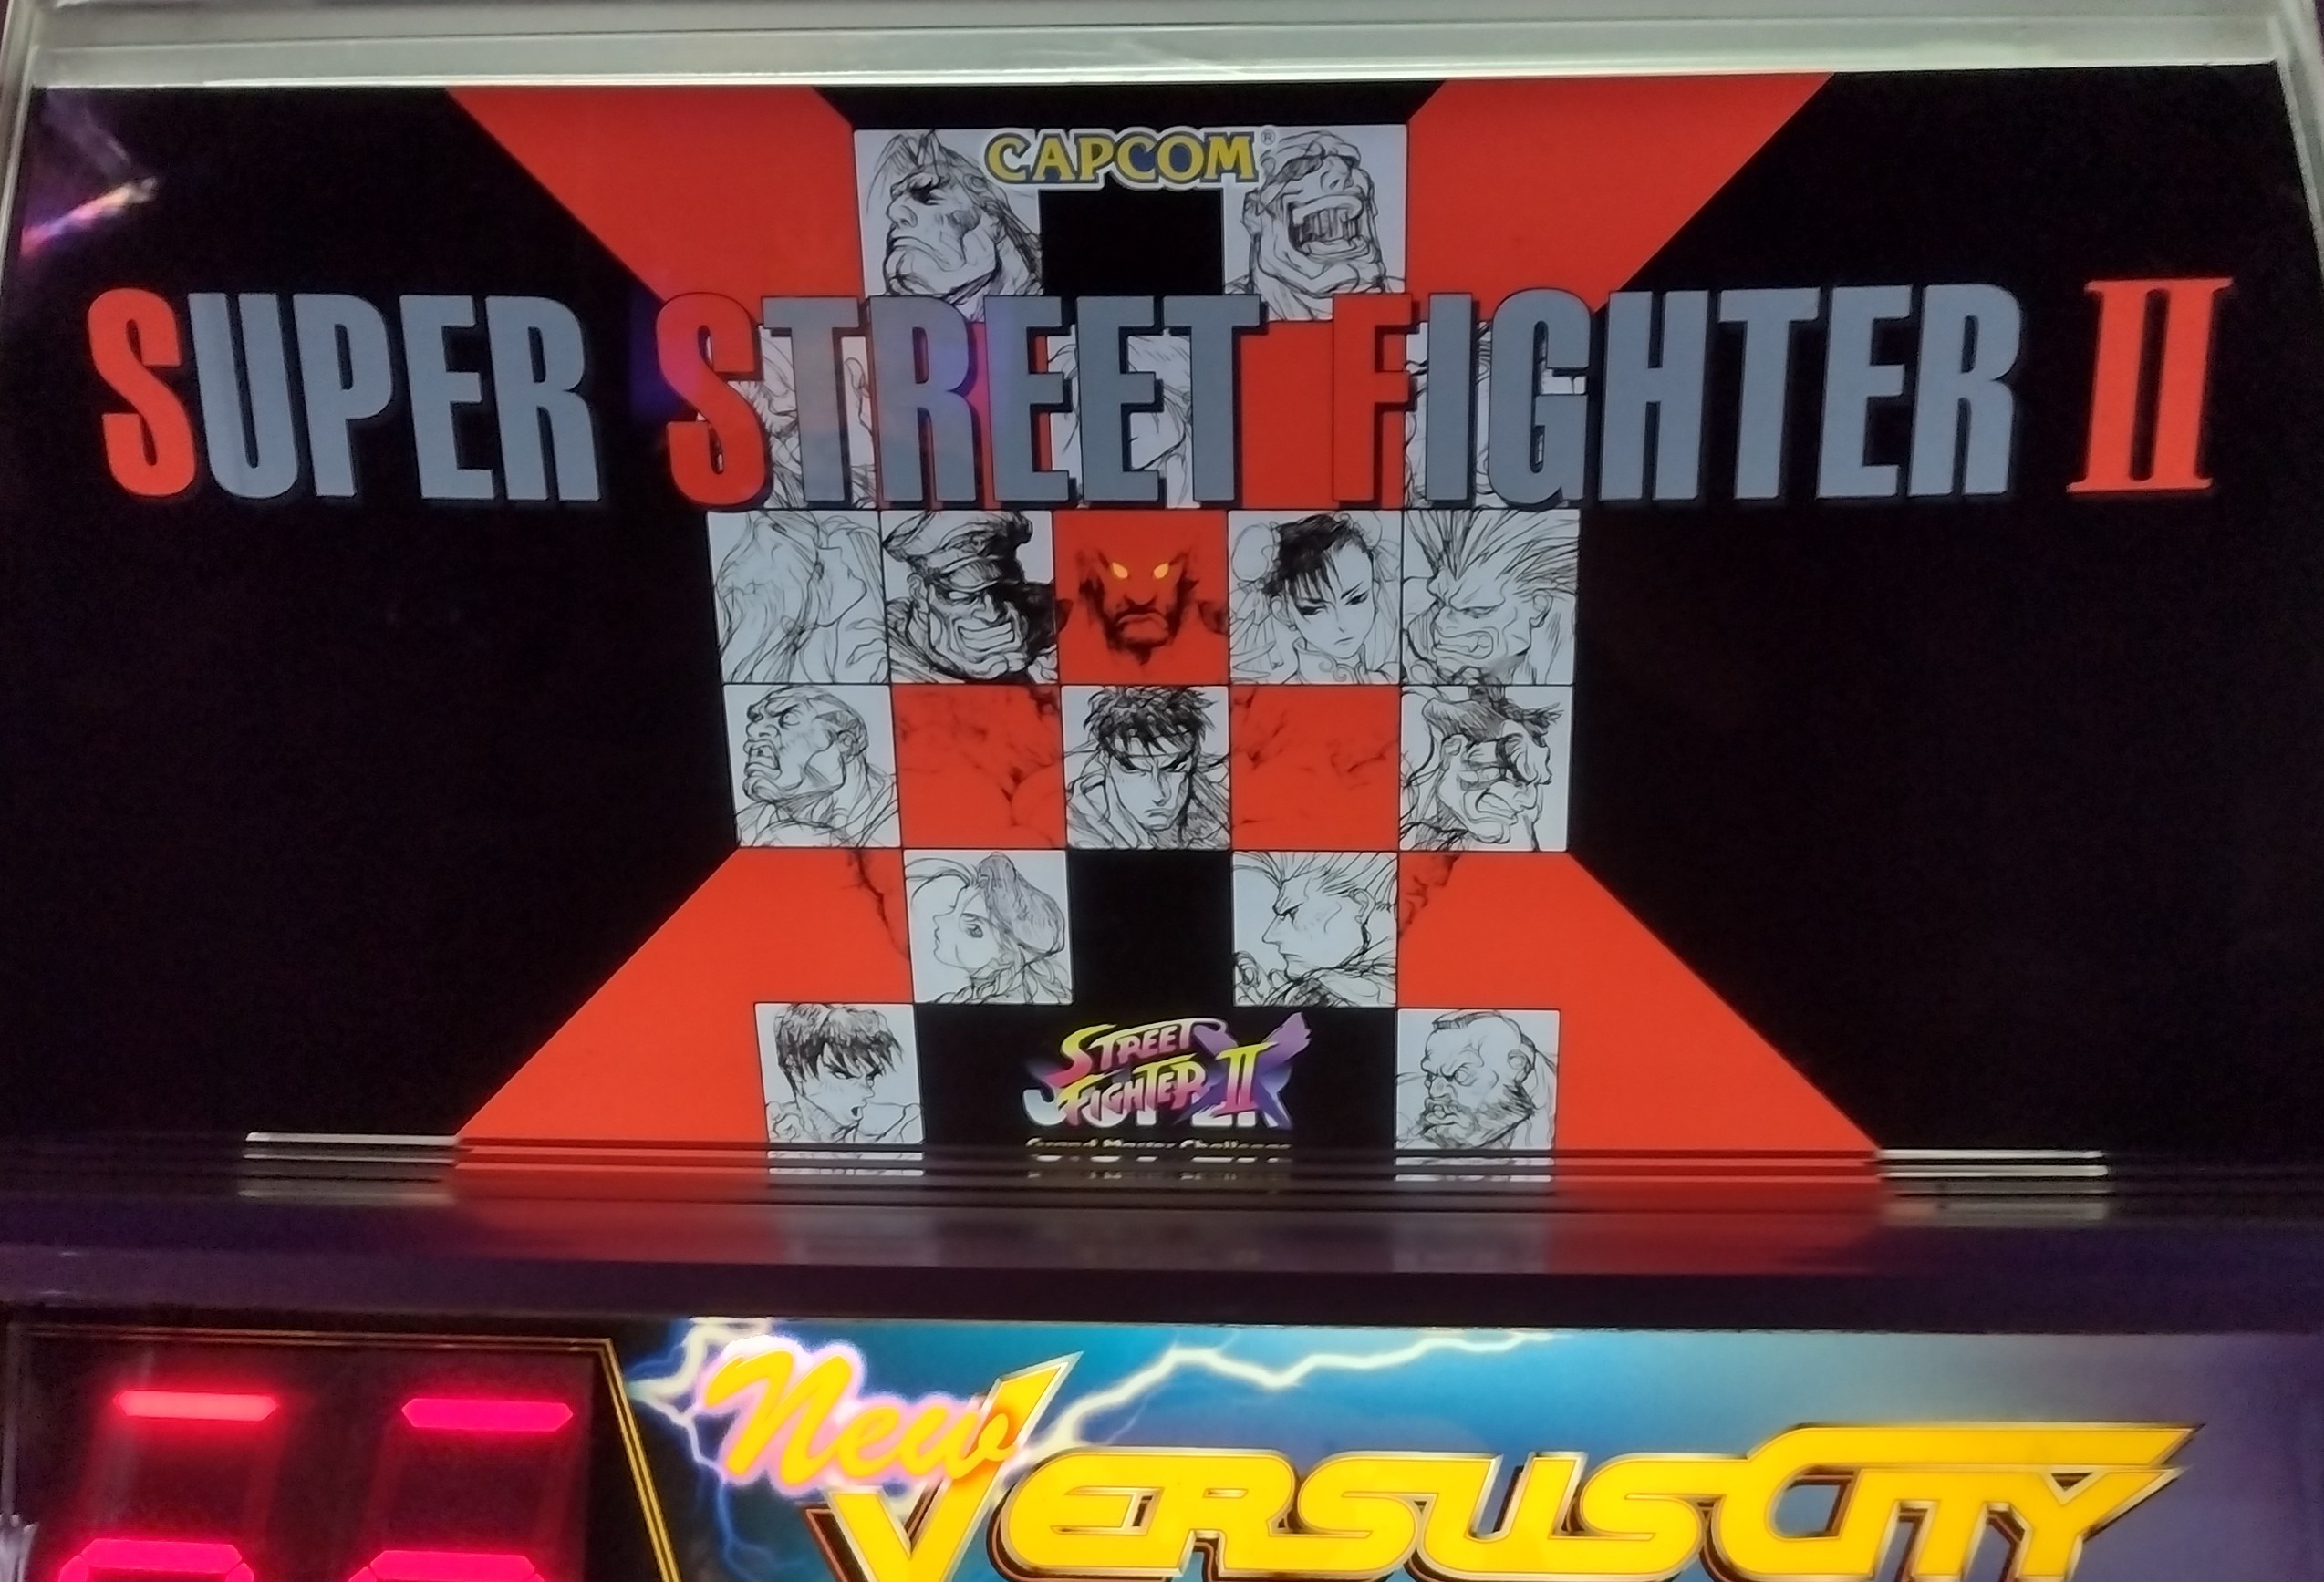 Hauntedprogram: Super Street Fighter II X Grandmaster Challenge (Arcade) 185,600 points on 2022-08-14 00:37:05